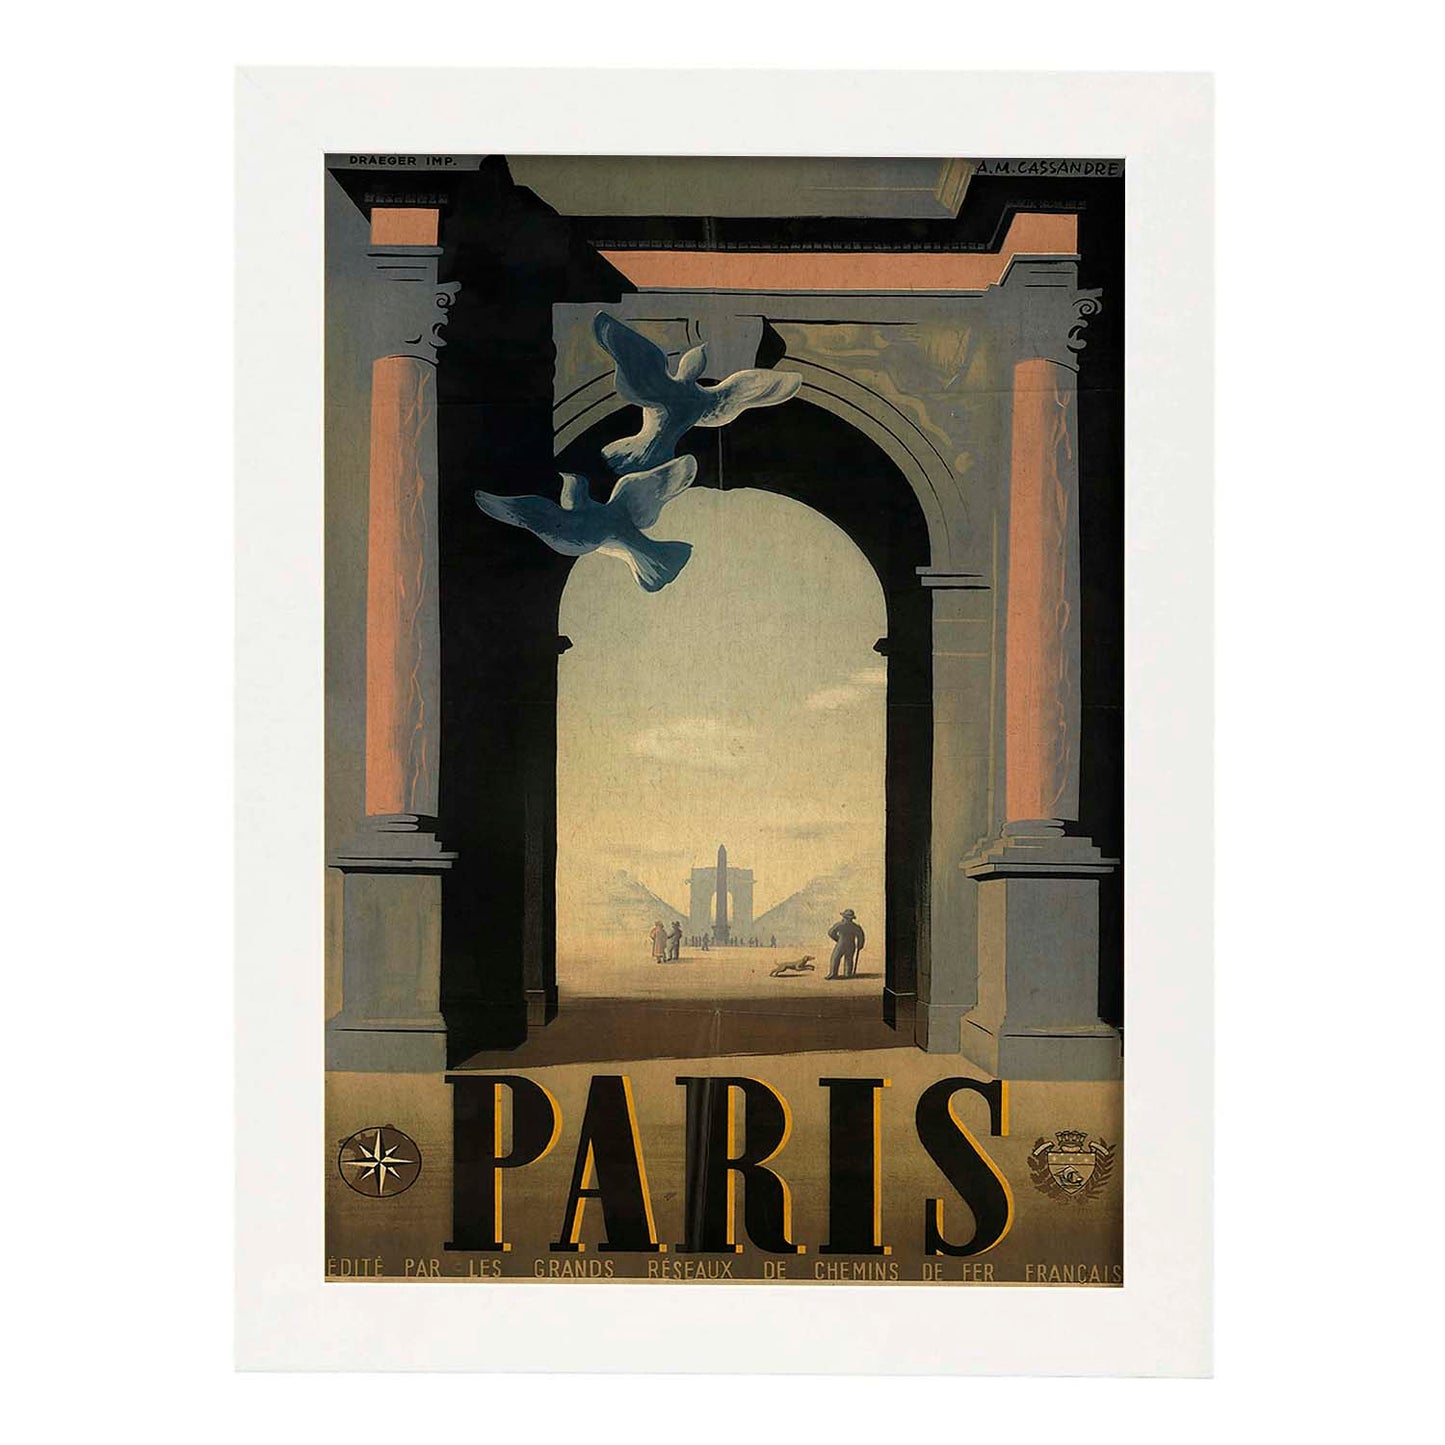 Poster vintage. Cartel vintage de Francia e Italia. Viaja a Paris.-Artwork-Nacnic-A4-Marco Blanco-Nacnic Estudio SL